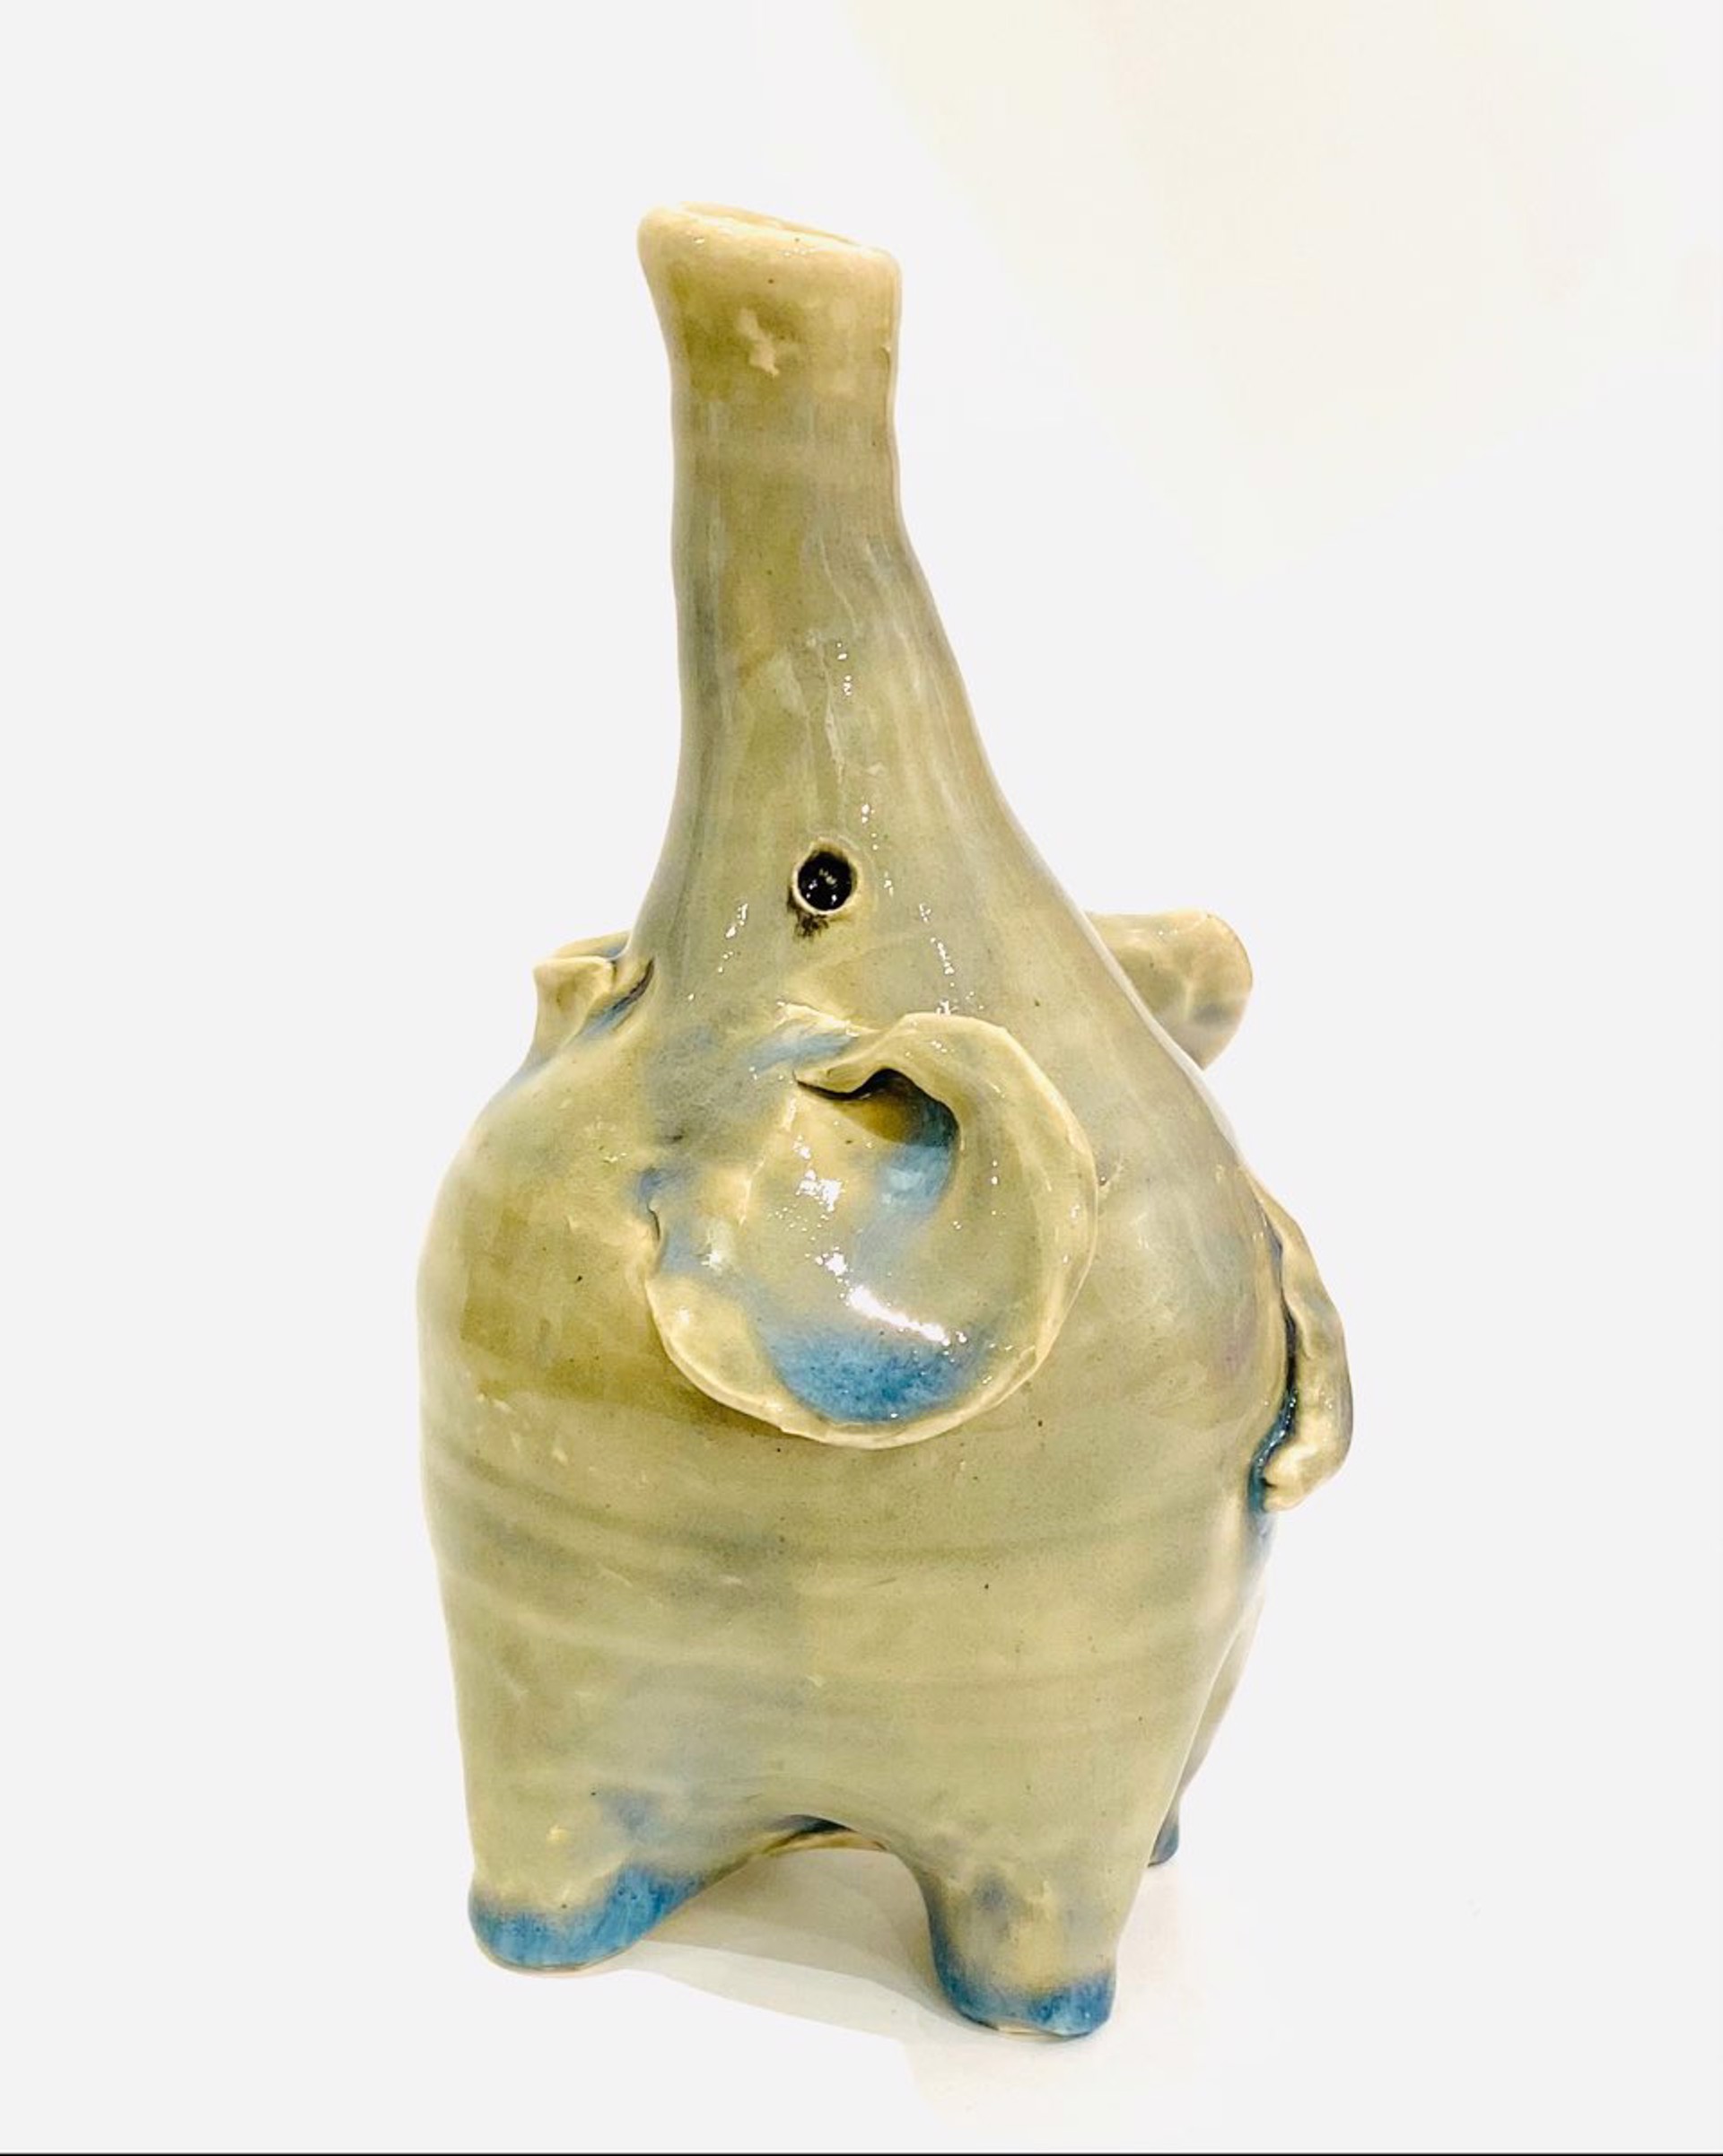 KK22-103  "Horton"' Elephant Vase by Kate Krause